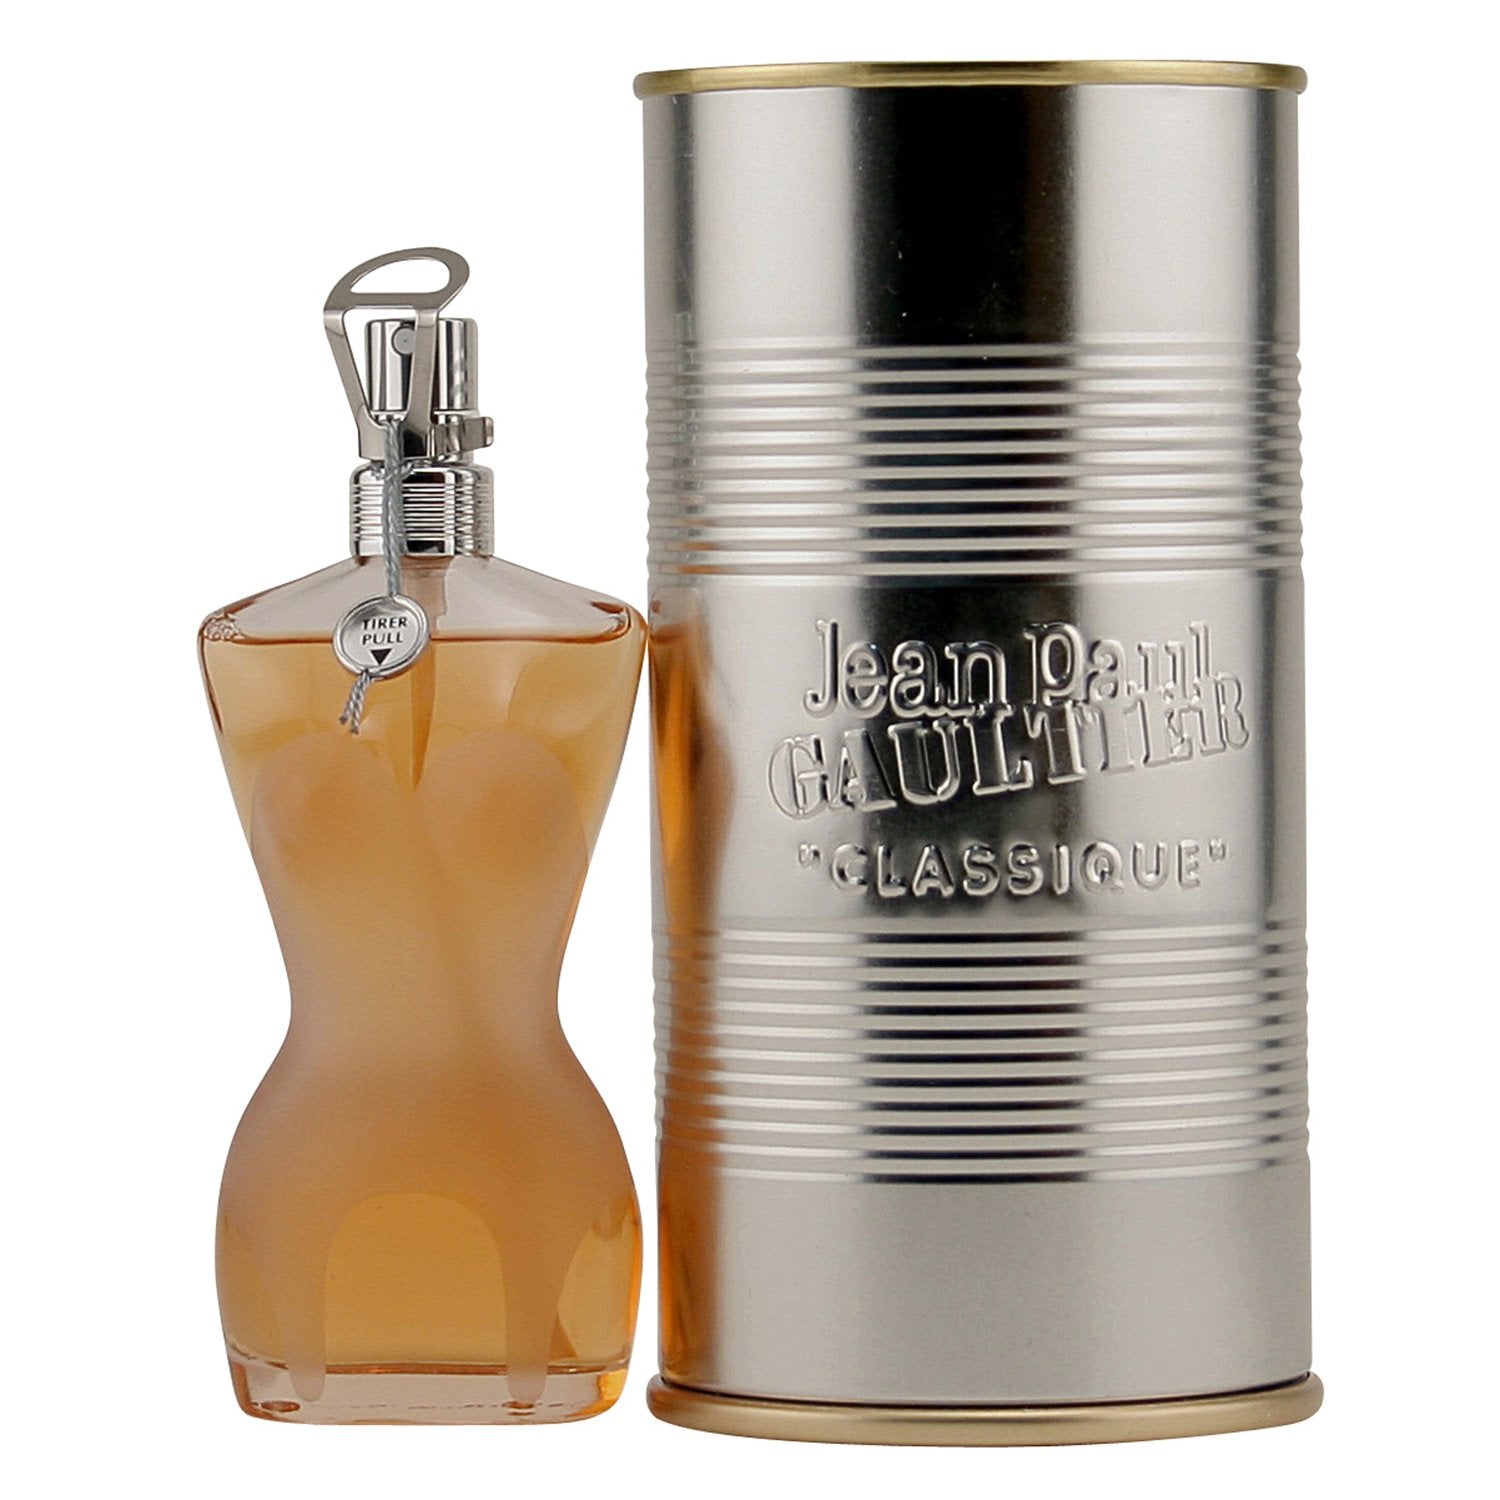 JEAN PAUL – SPRAY DE CLASSIQUE WOMEN Fragrance TOILETTE EAU GAULTIER Room - FOR